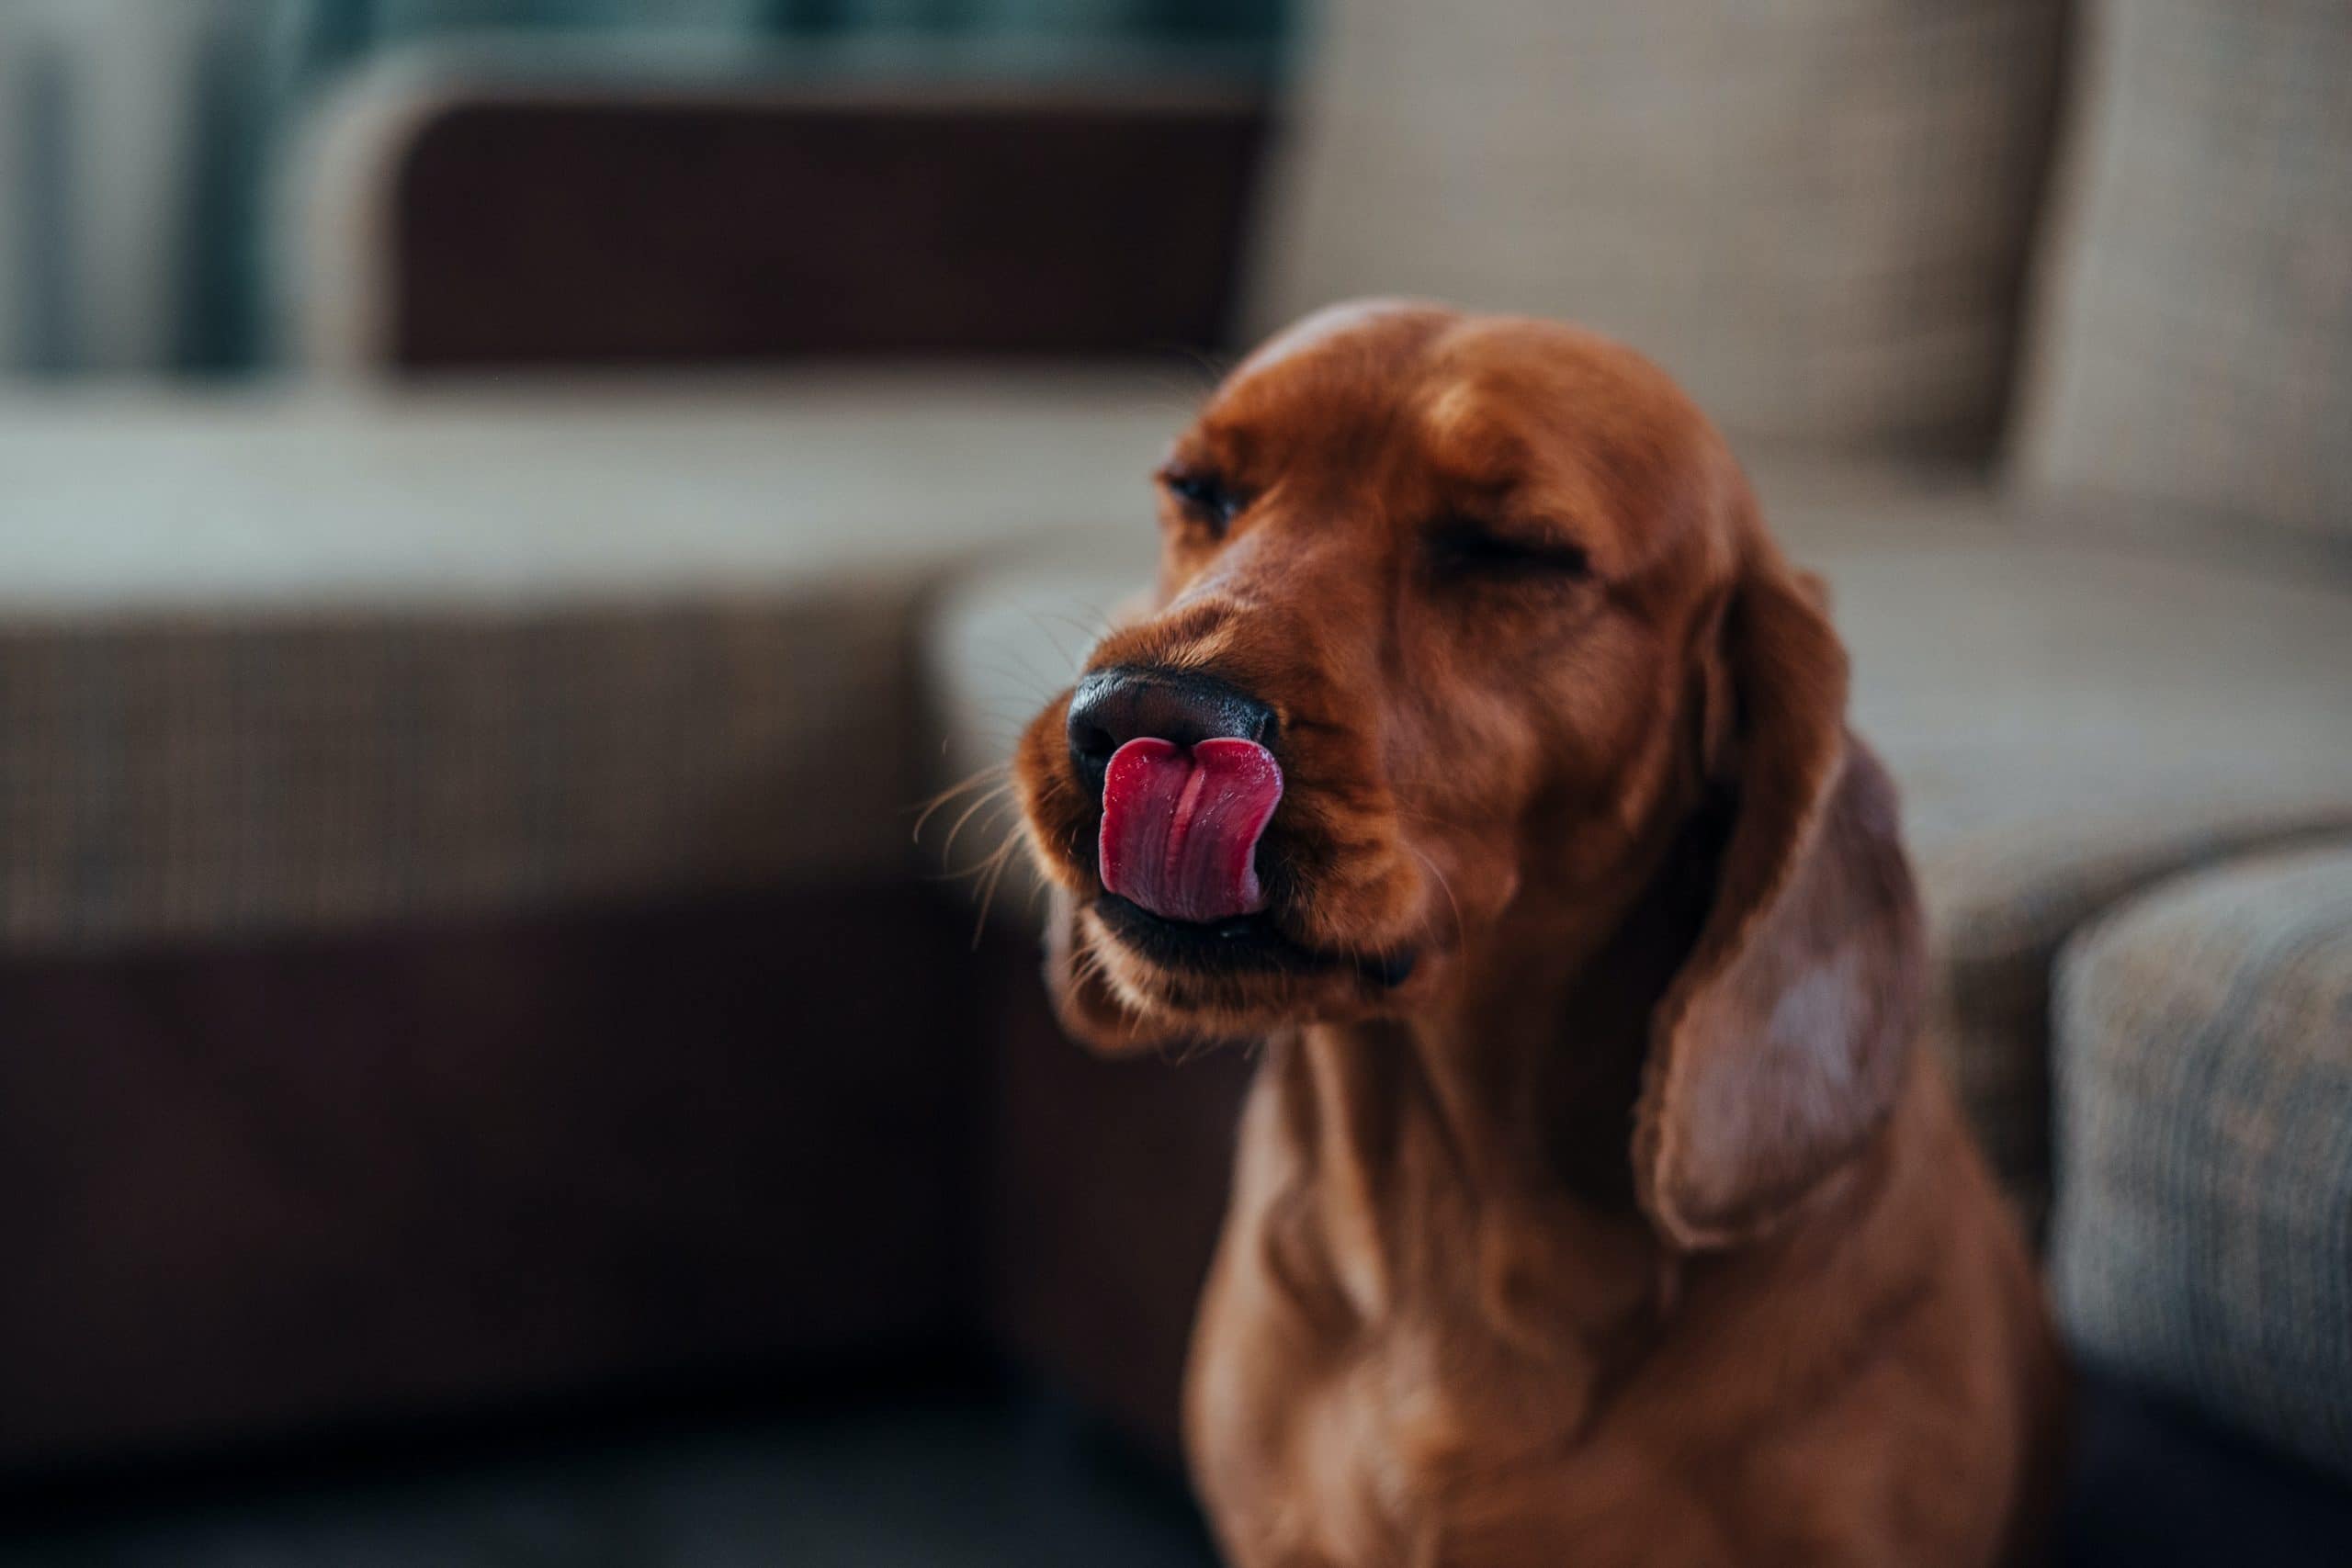 A dog licking its lips.